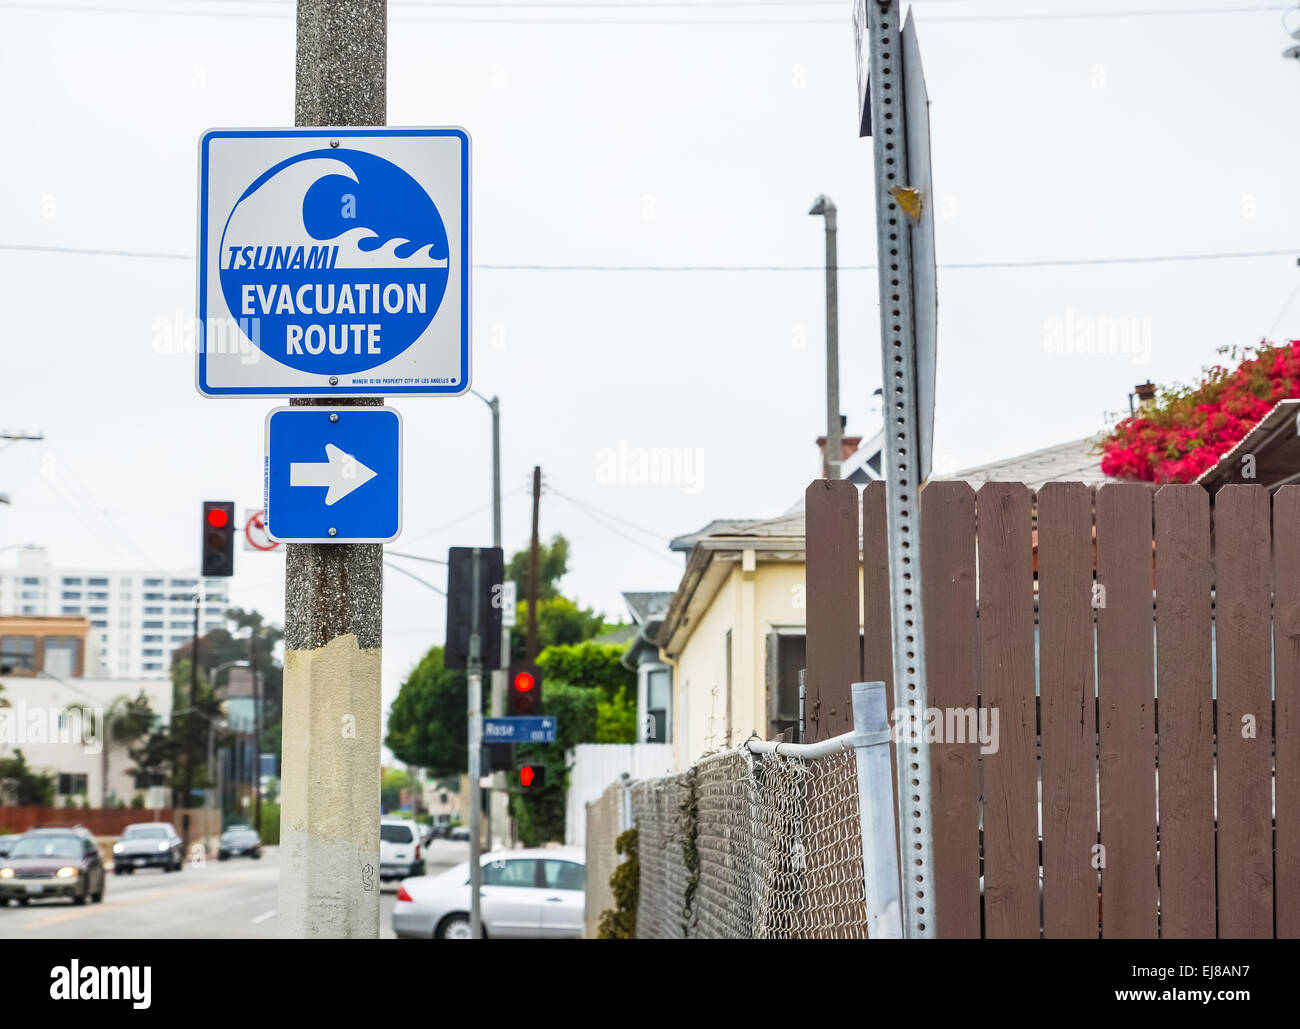 Tsunami-Evacuation Route in Los Angeles Stock Photo